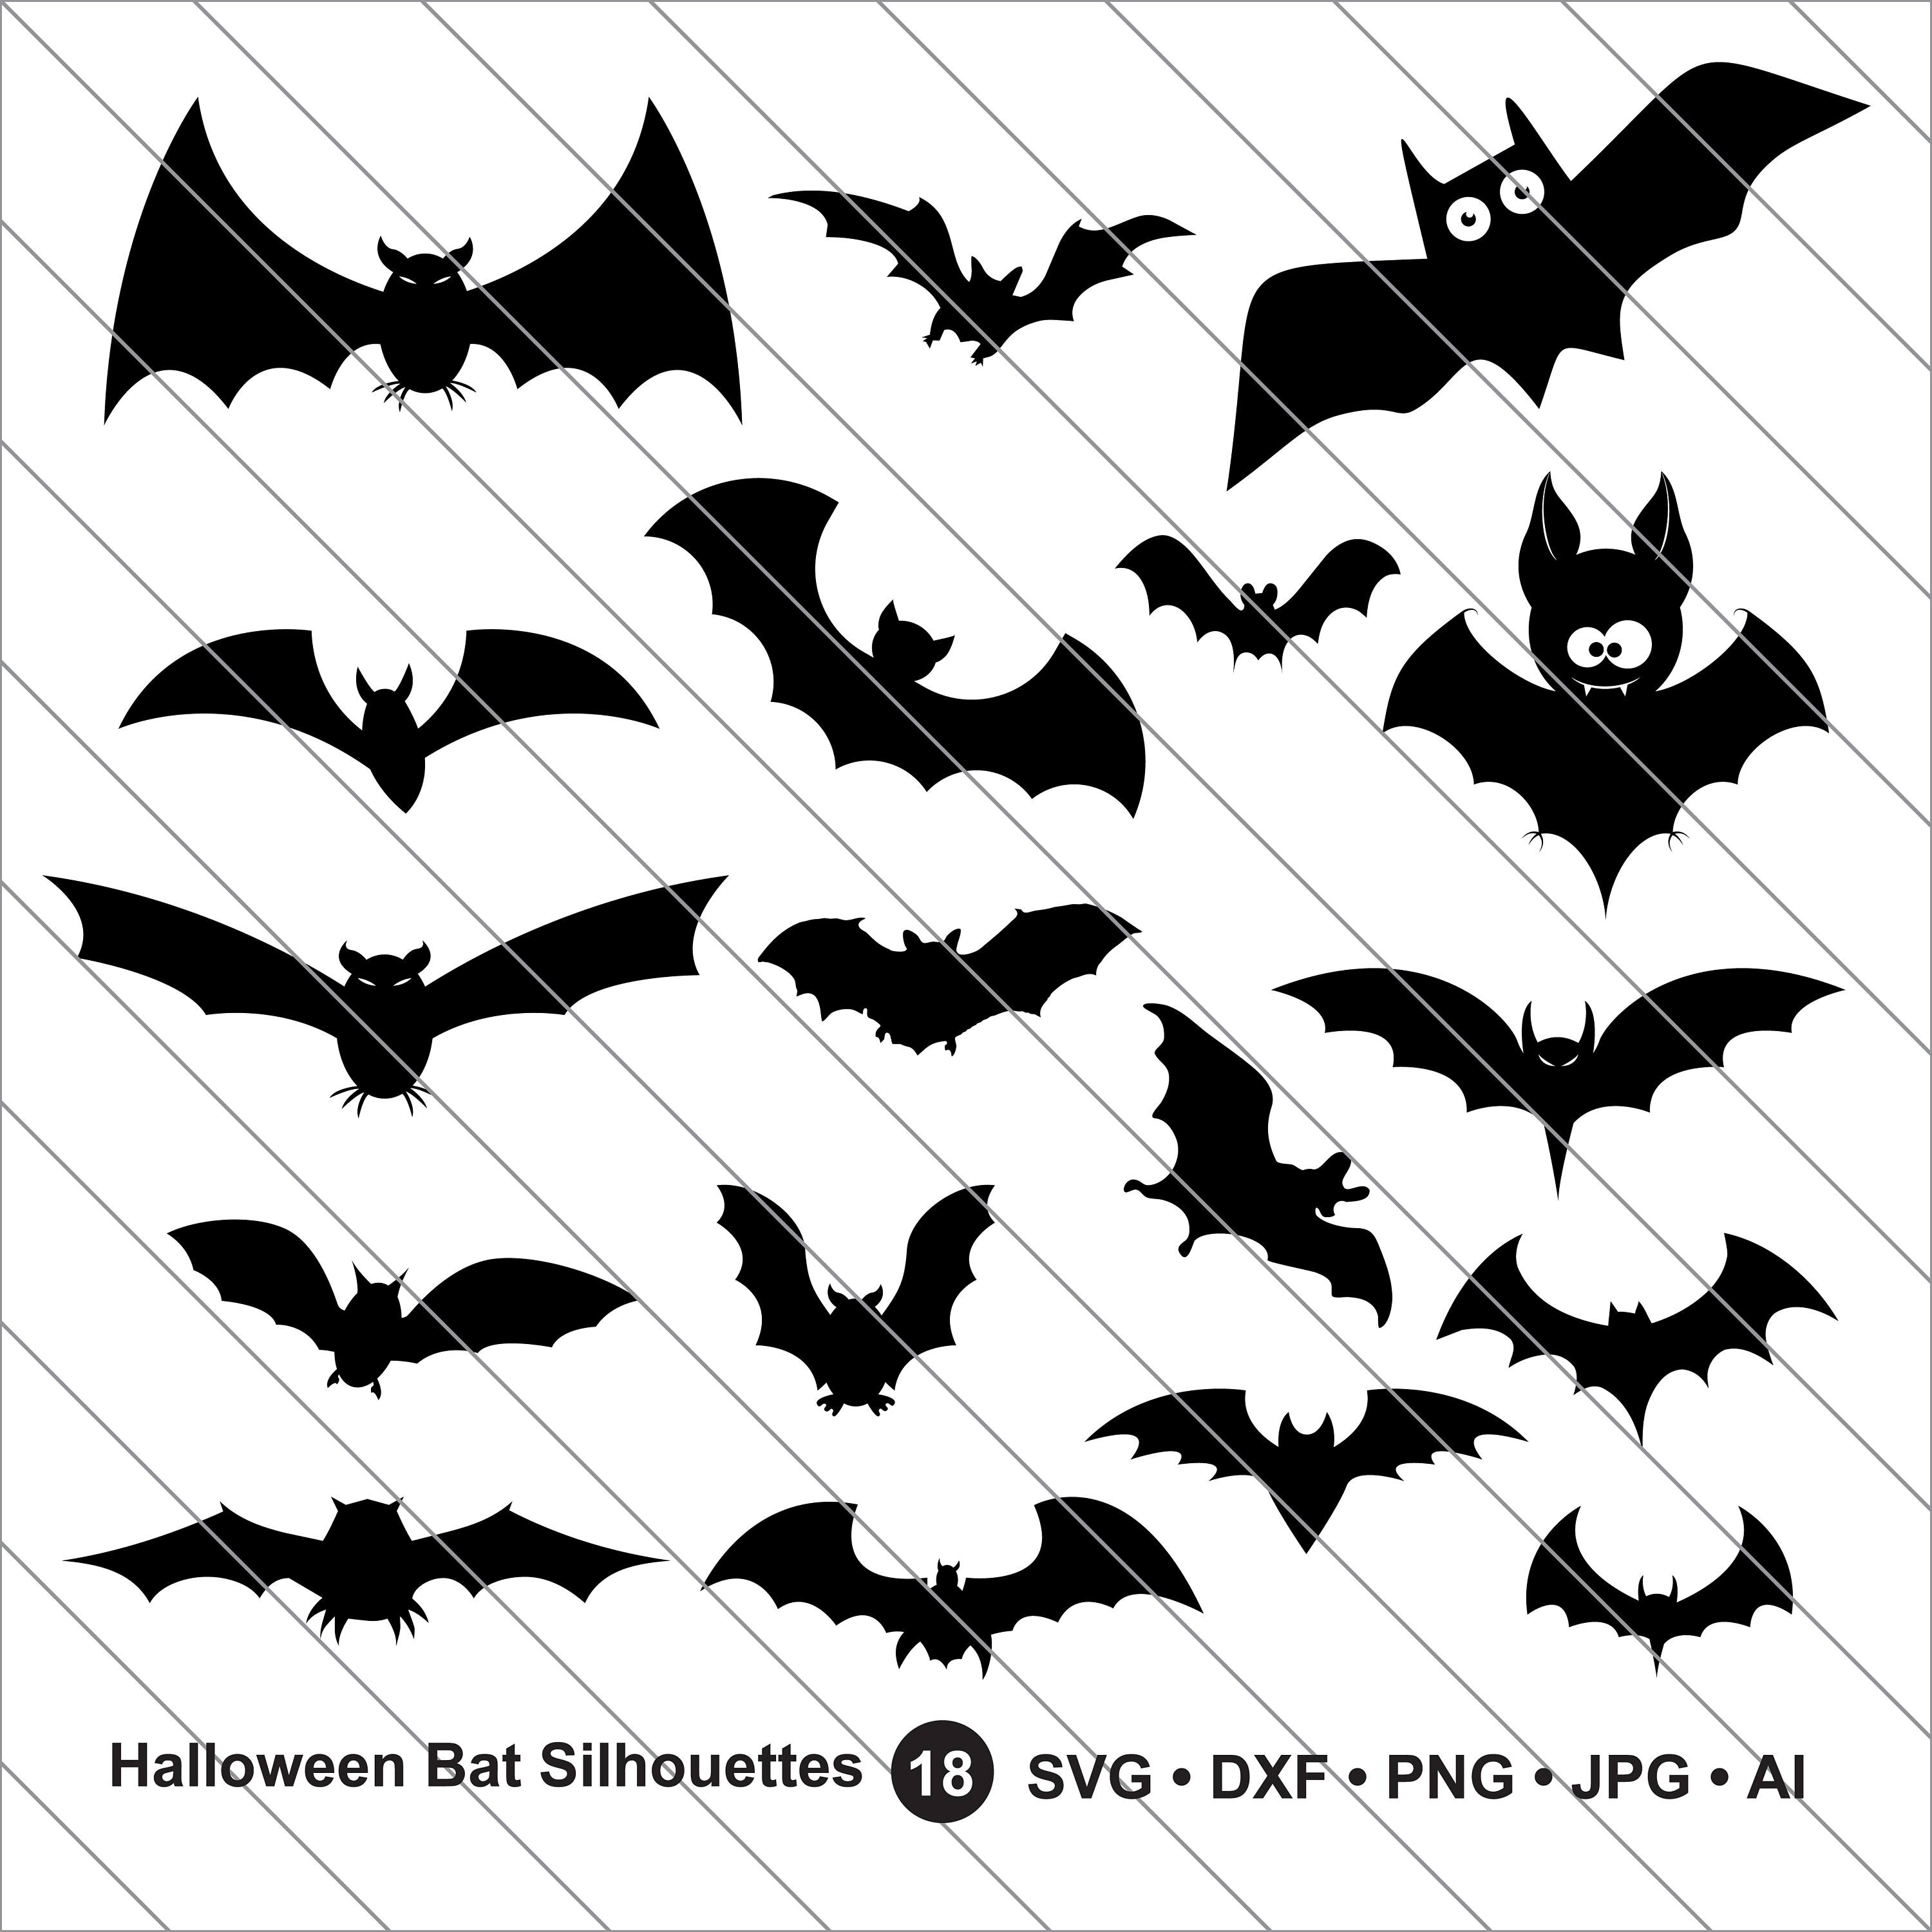 Download Halloween Bat Silhouettes SVG halloween cliaprt halloween